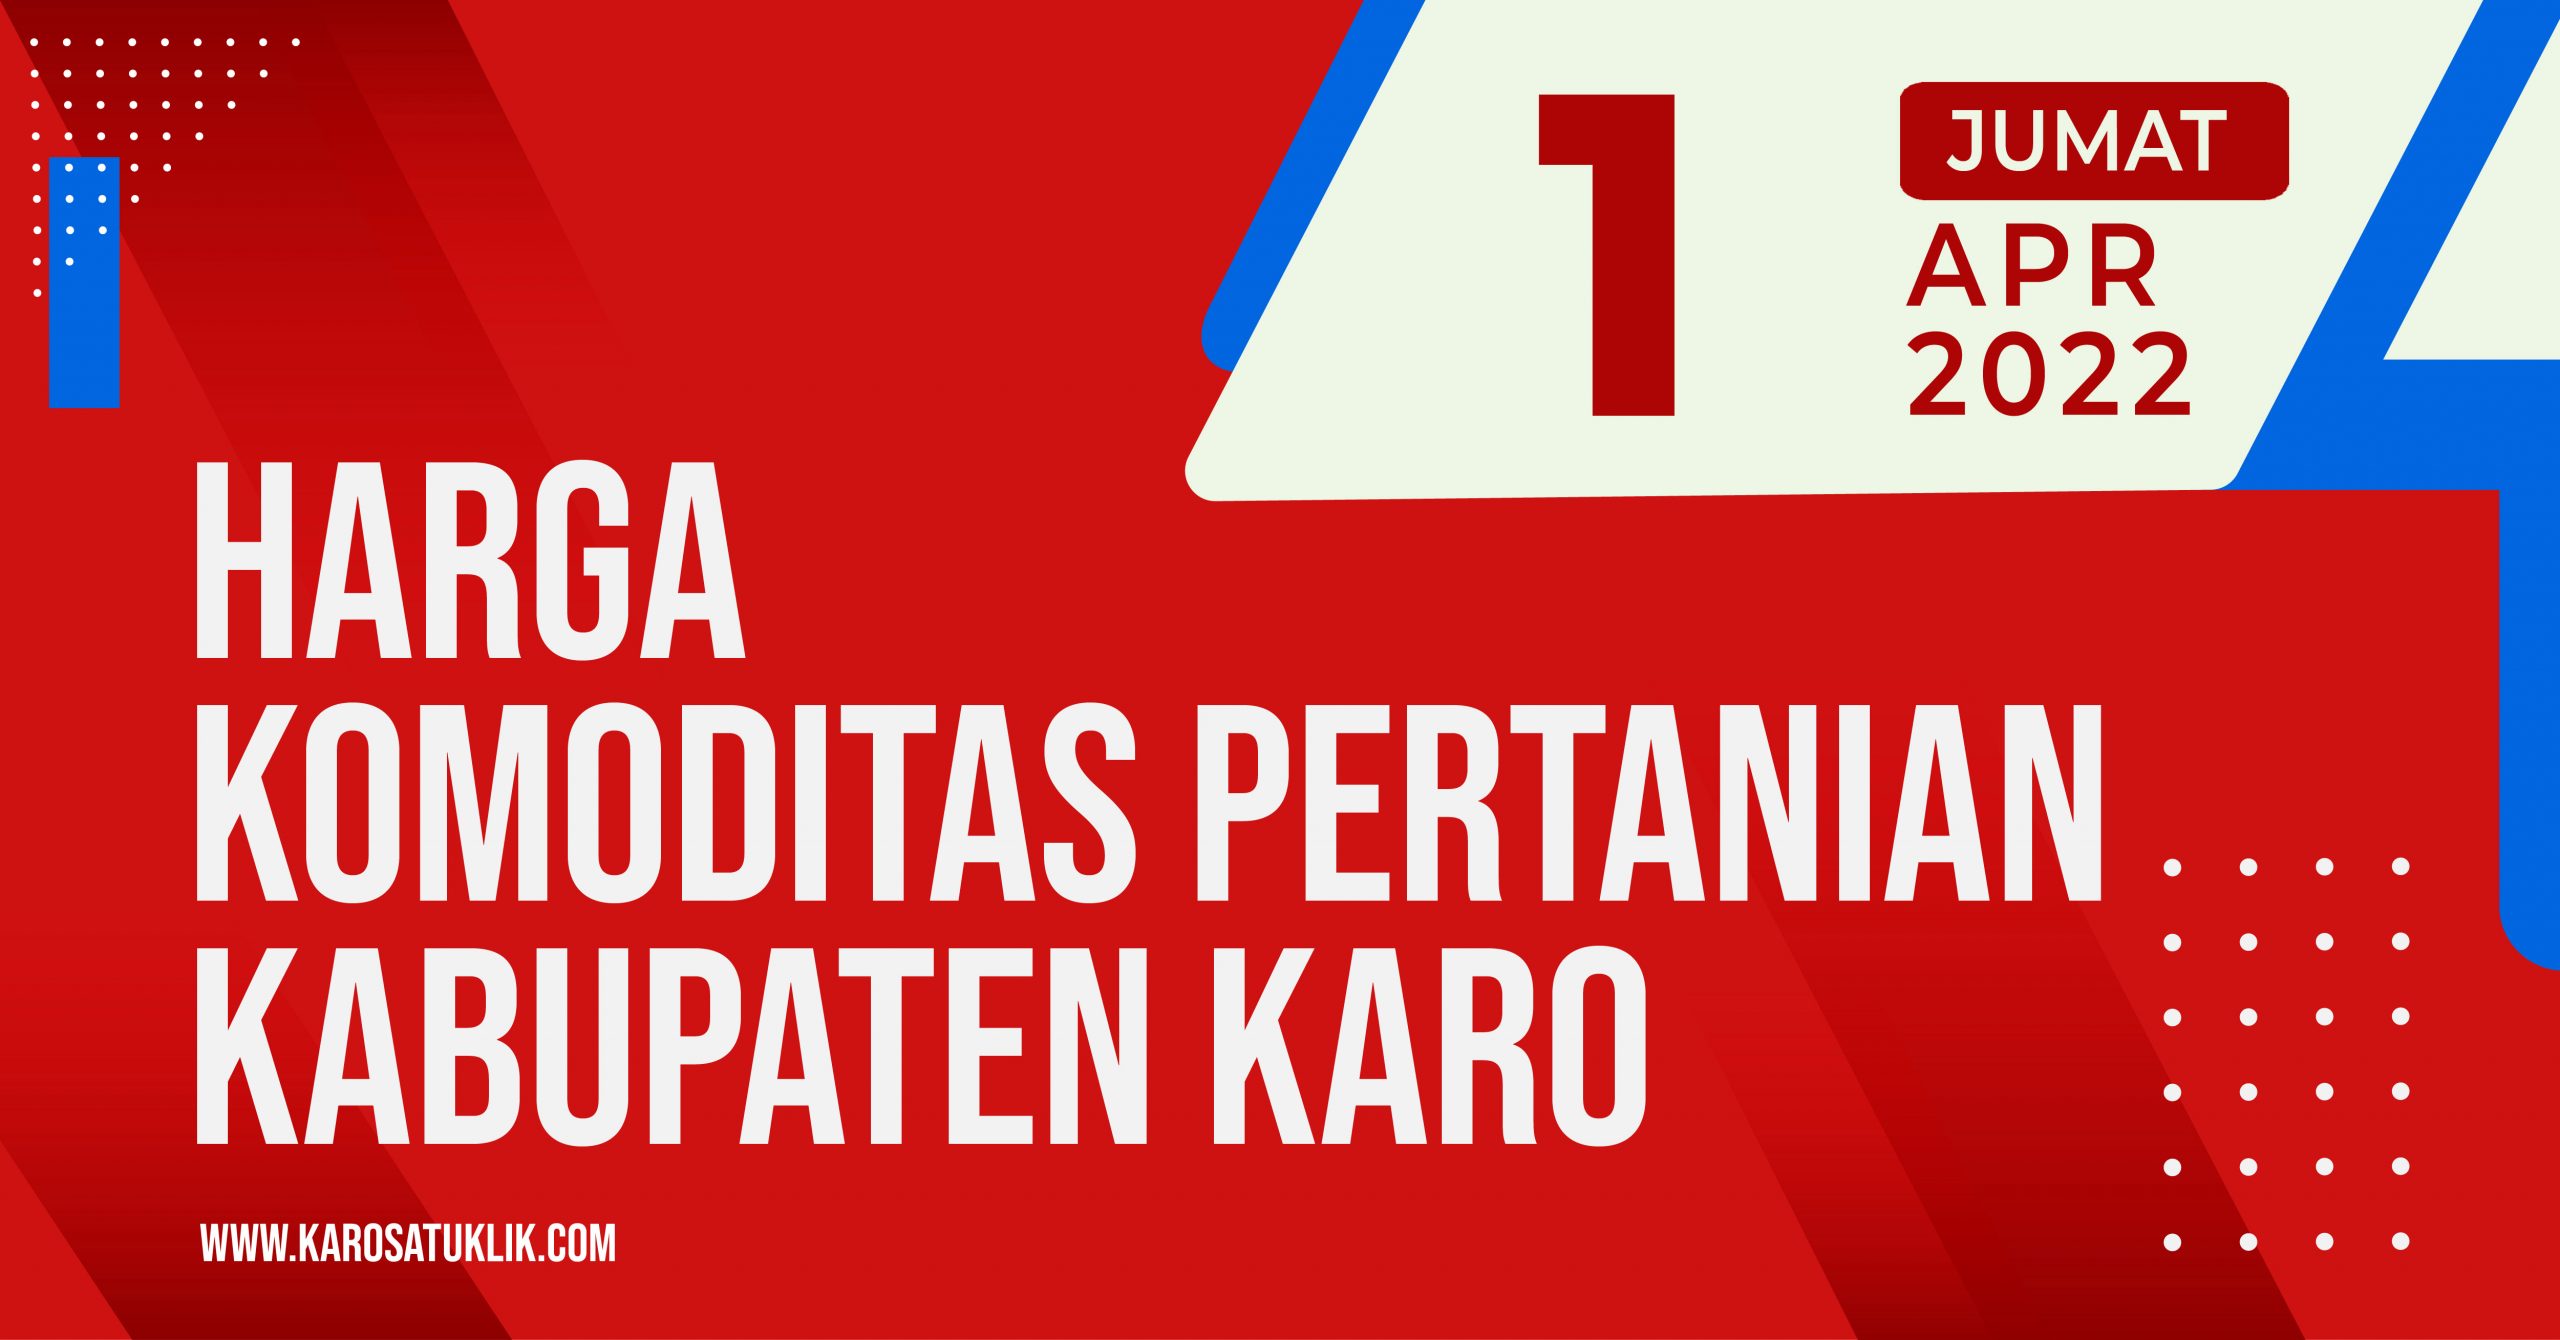 Daftar Harga Komoditas Pertanian Kabupaten Karo, Jumat 1 April 2022